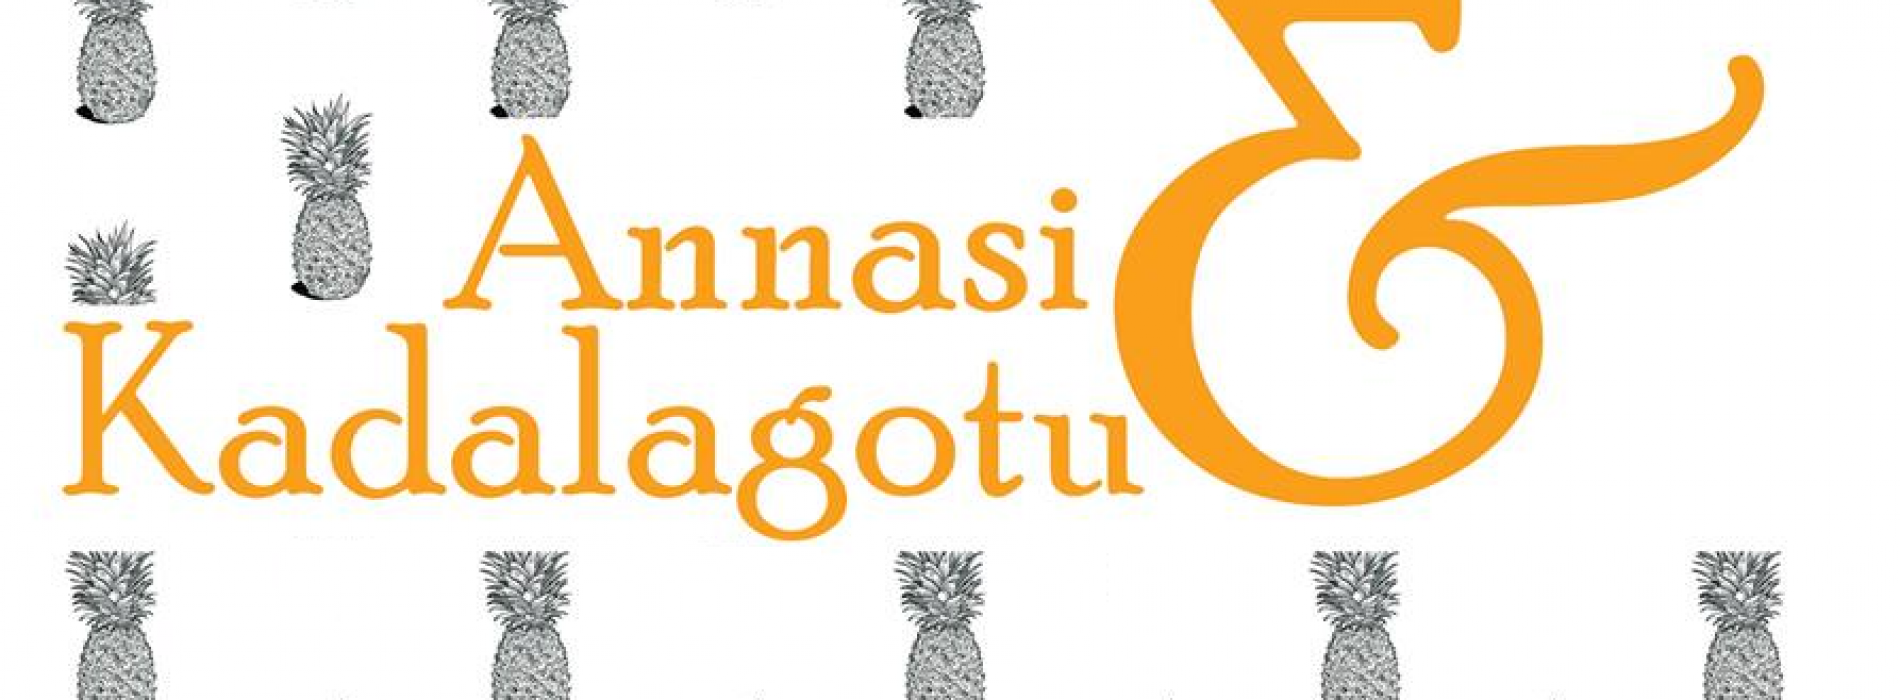 Submissions Open For The Next Annasi & Kadalagotu Volume